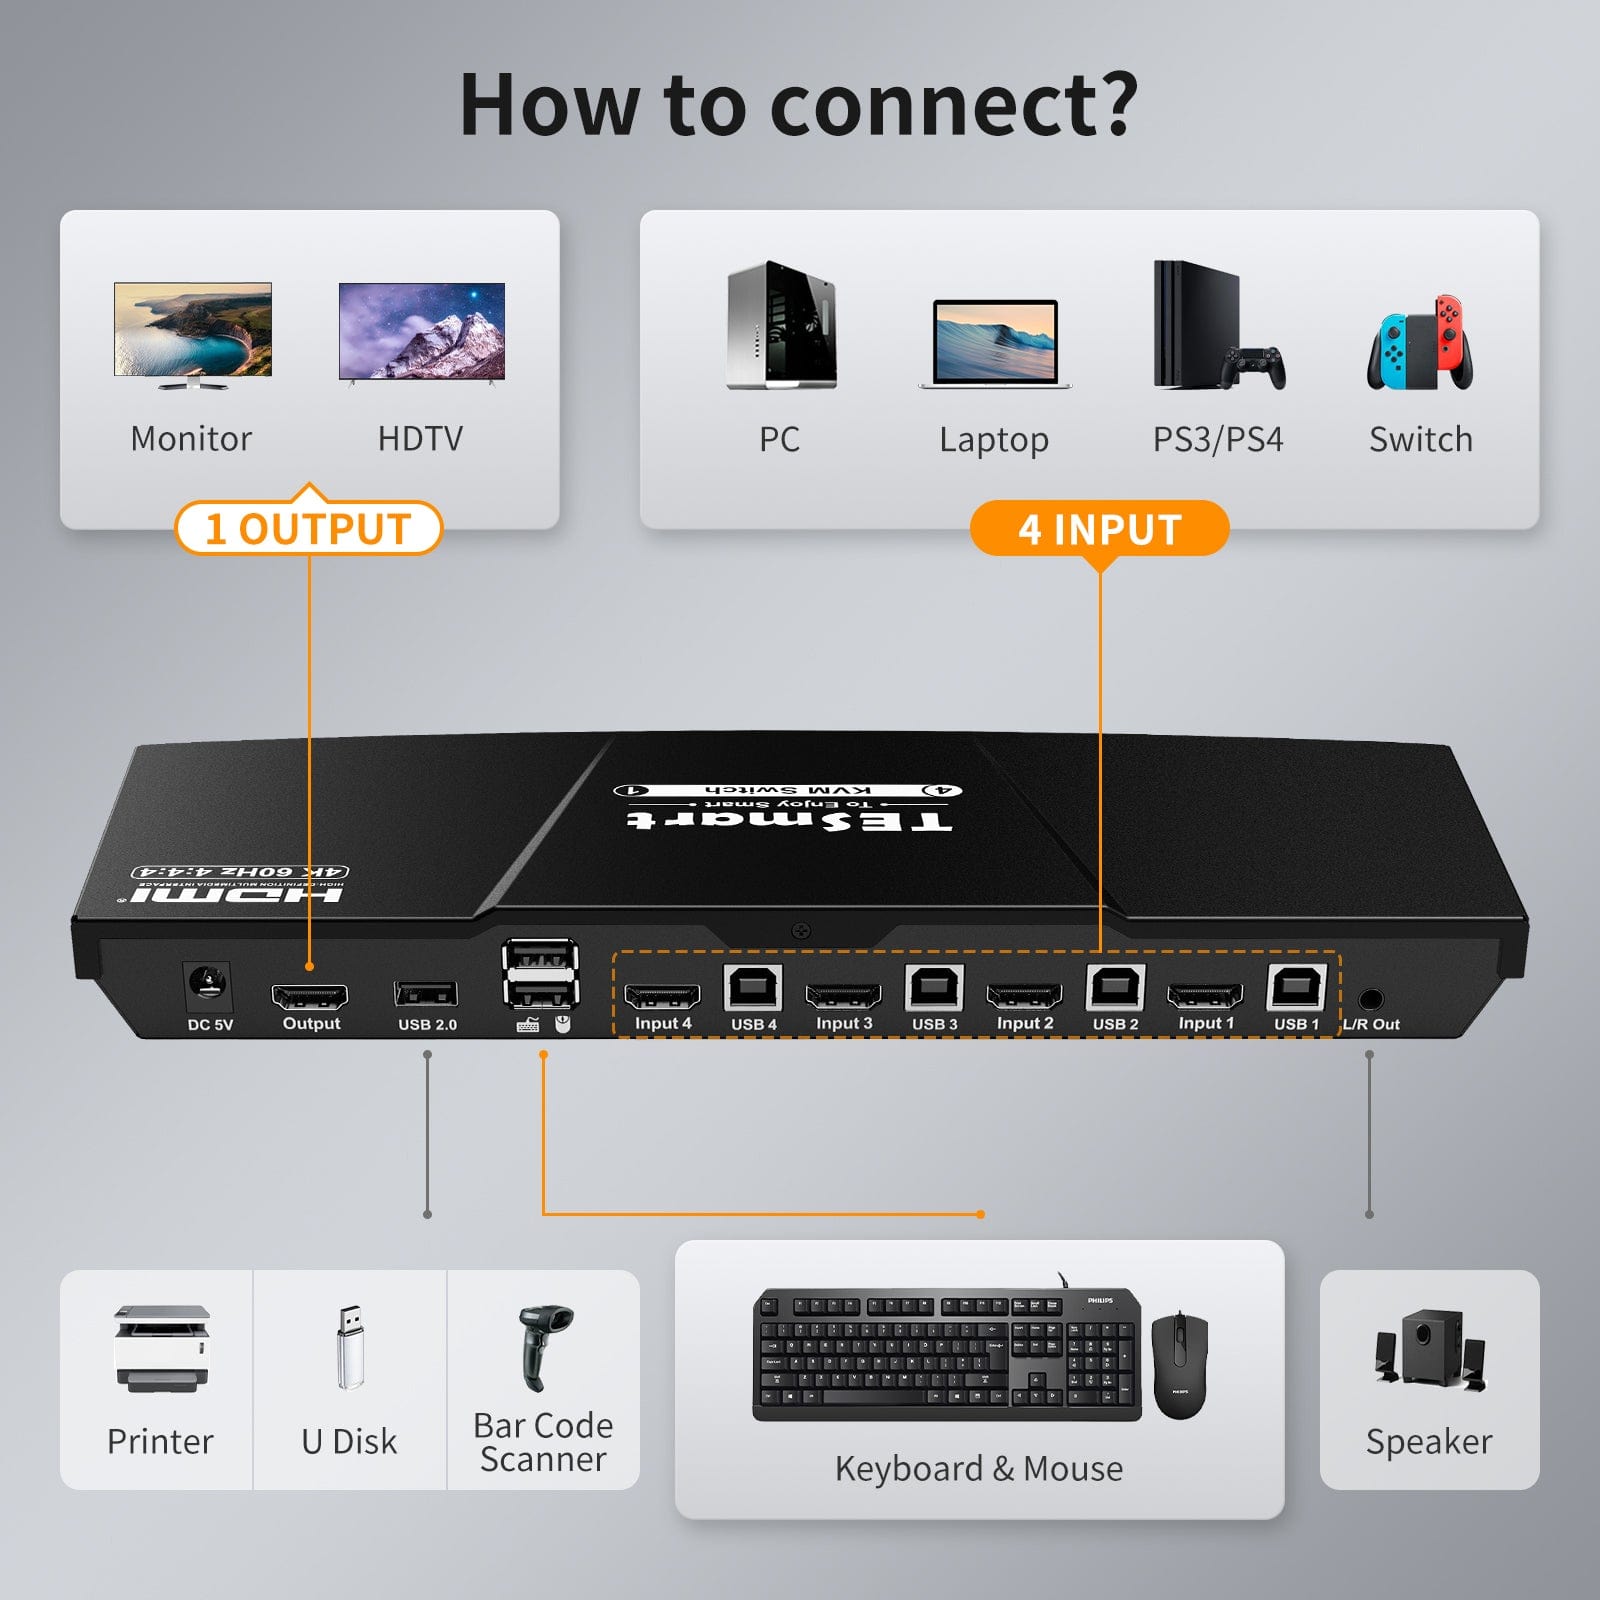 HDMI KVM switch 4 port 4K60Hz with EDID,USB hub TESmart